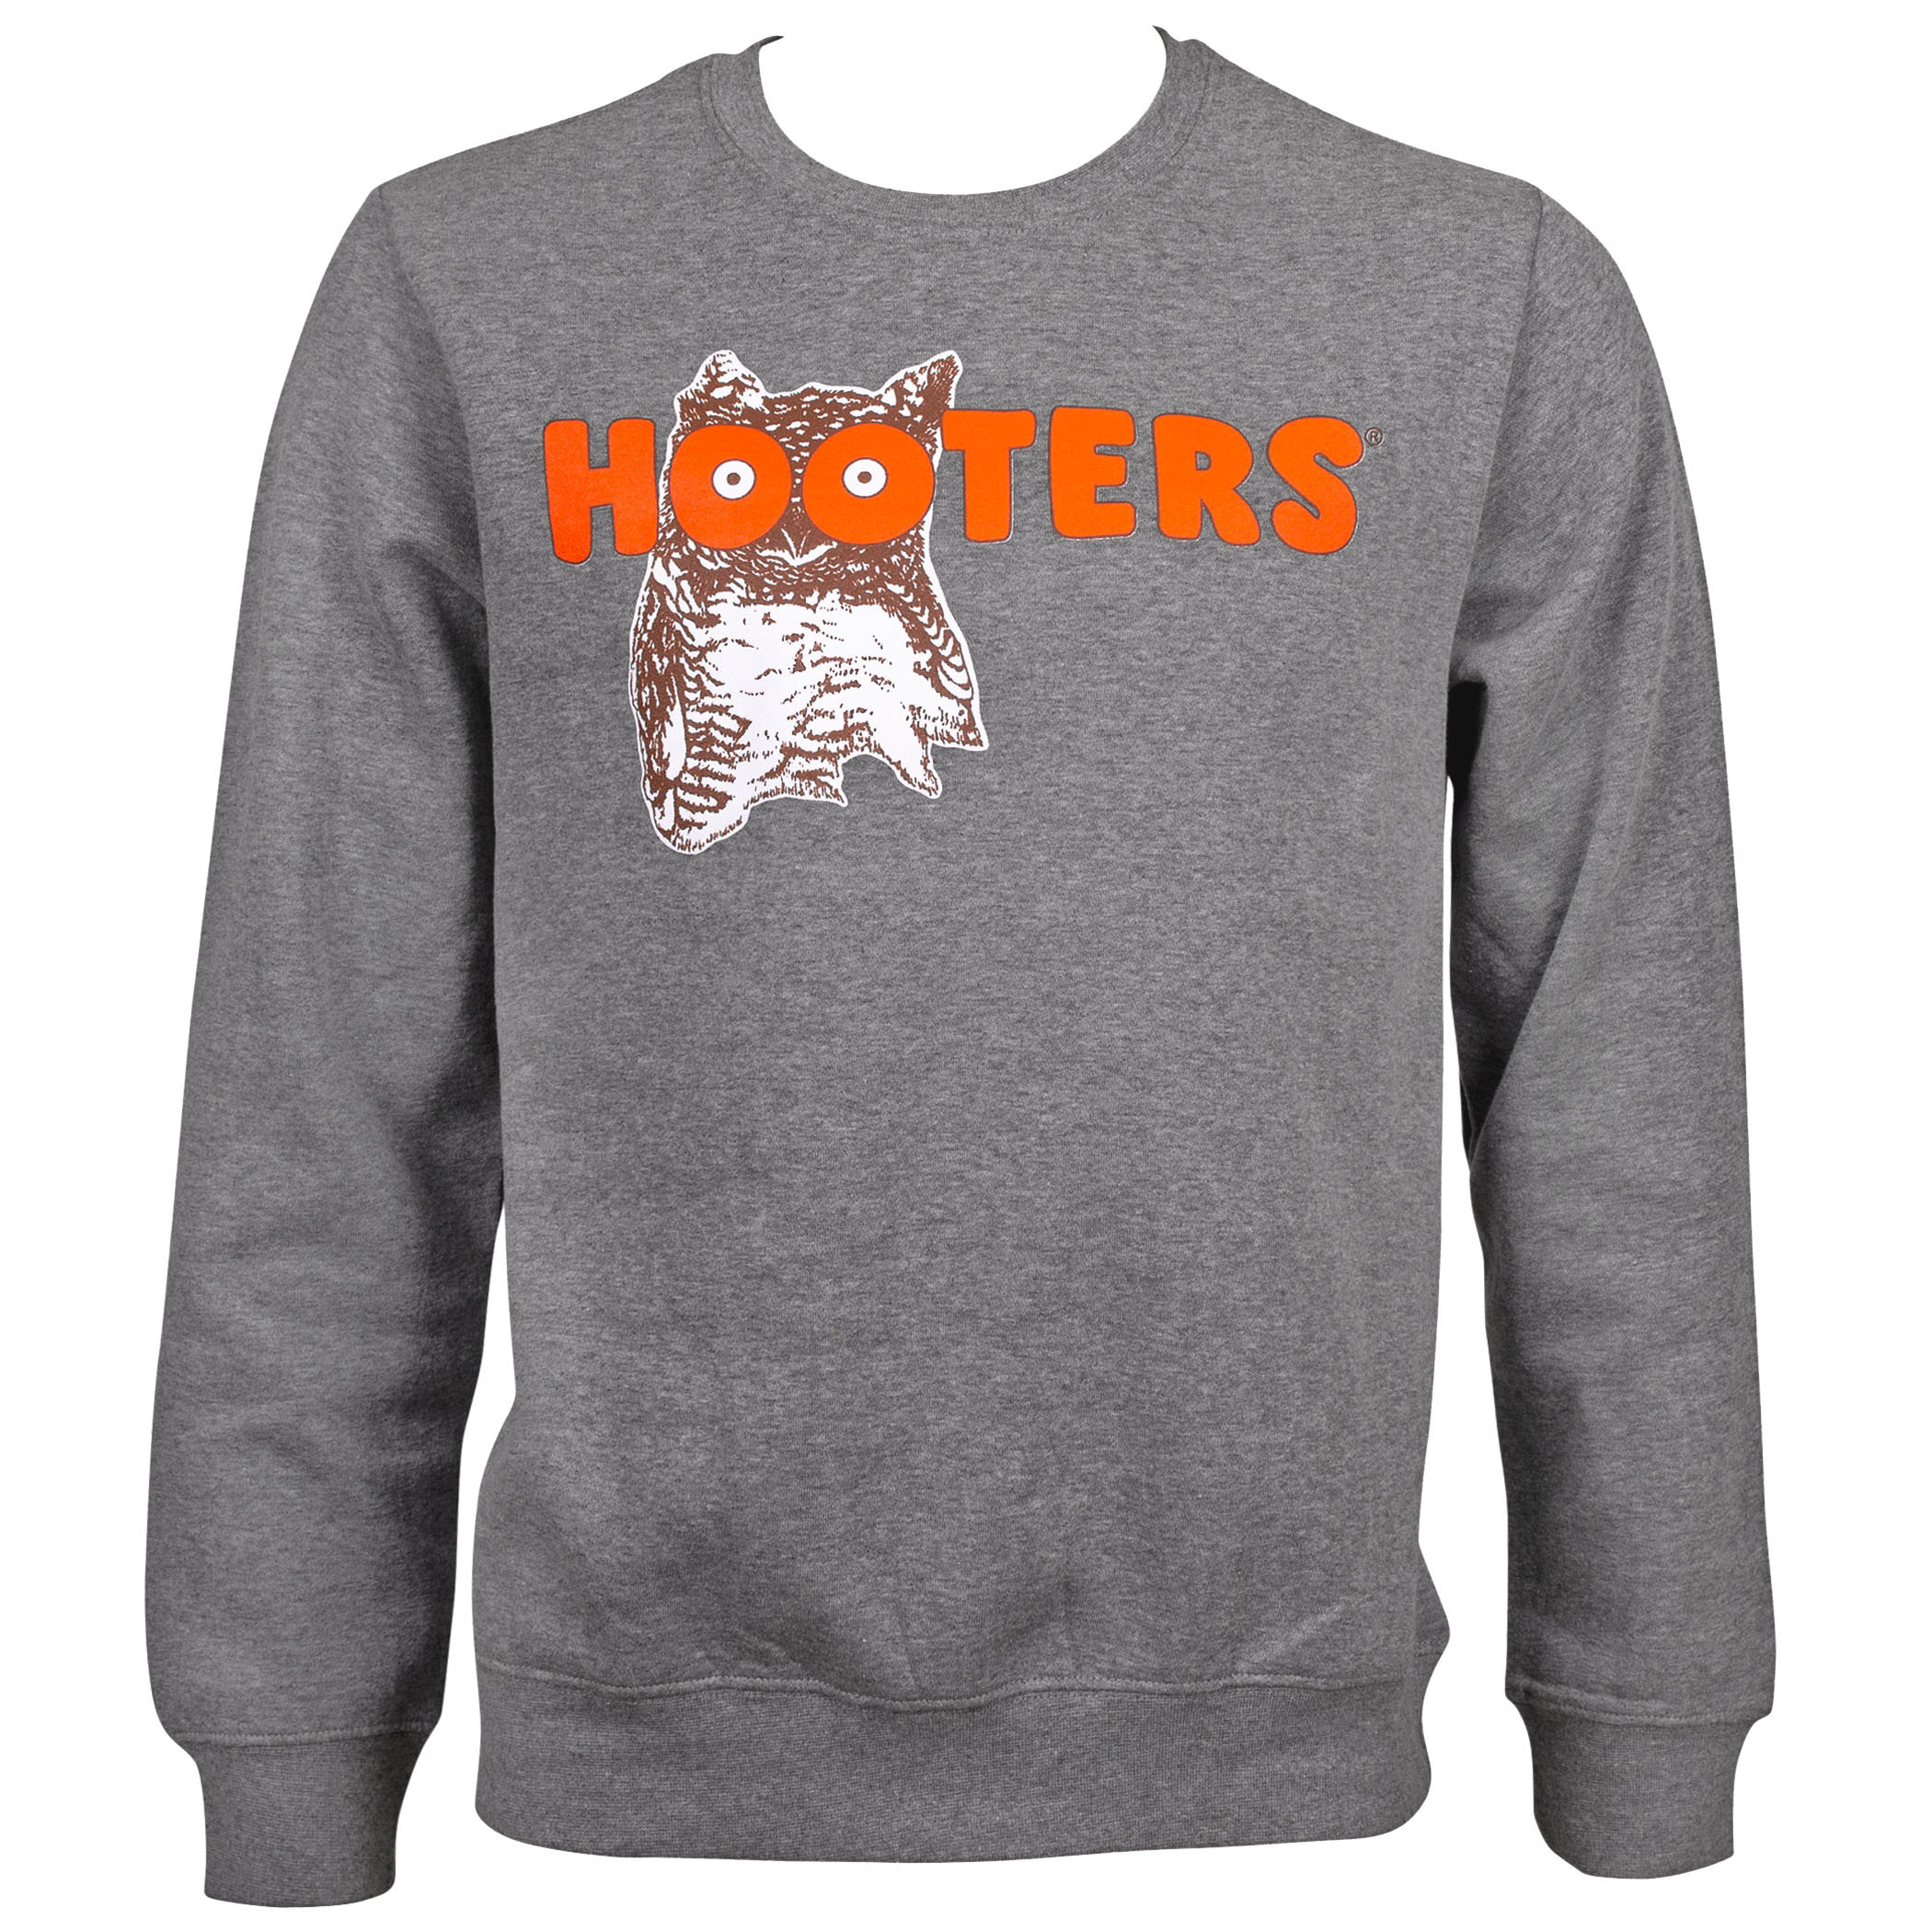 Hooters Grey Crewneck Sweatshirt